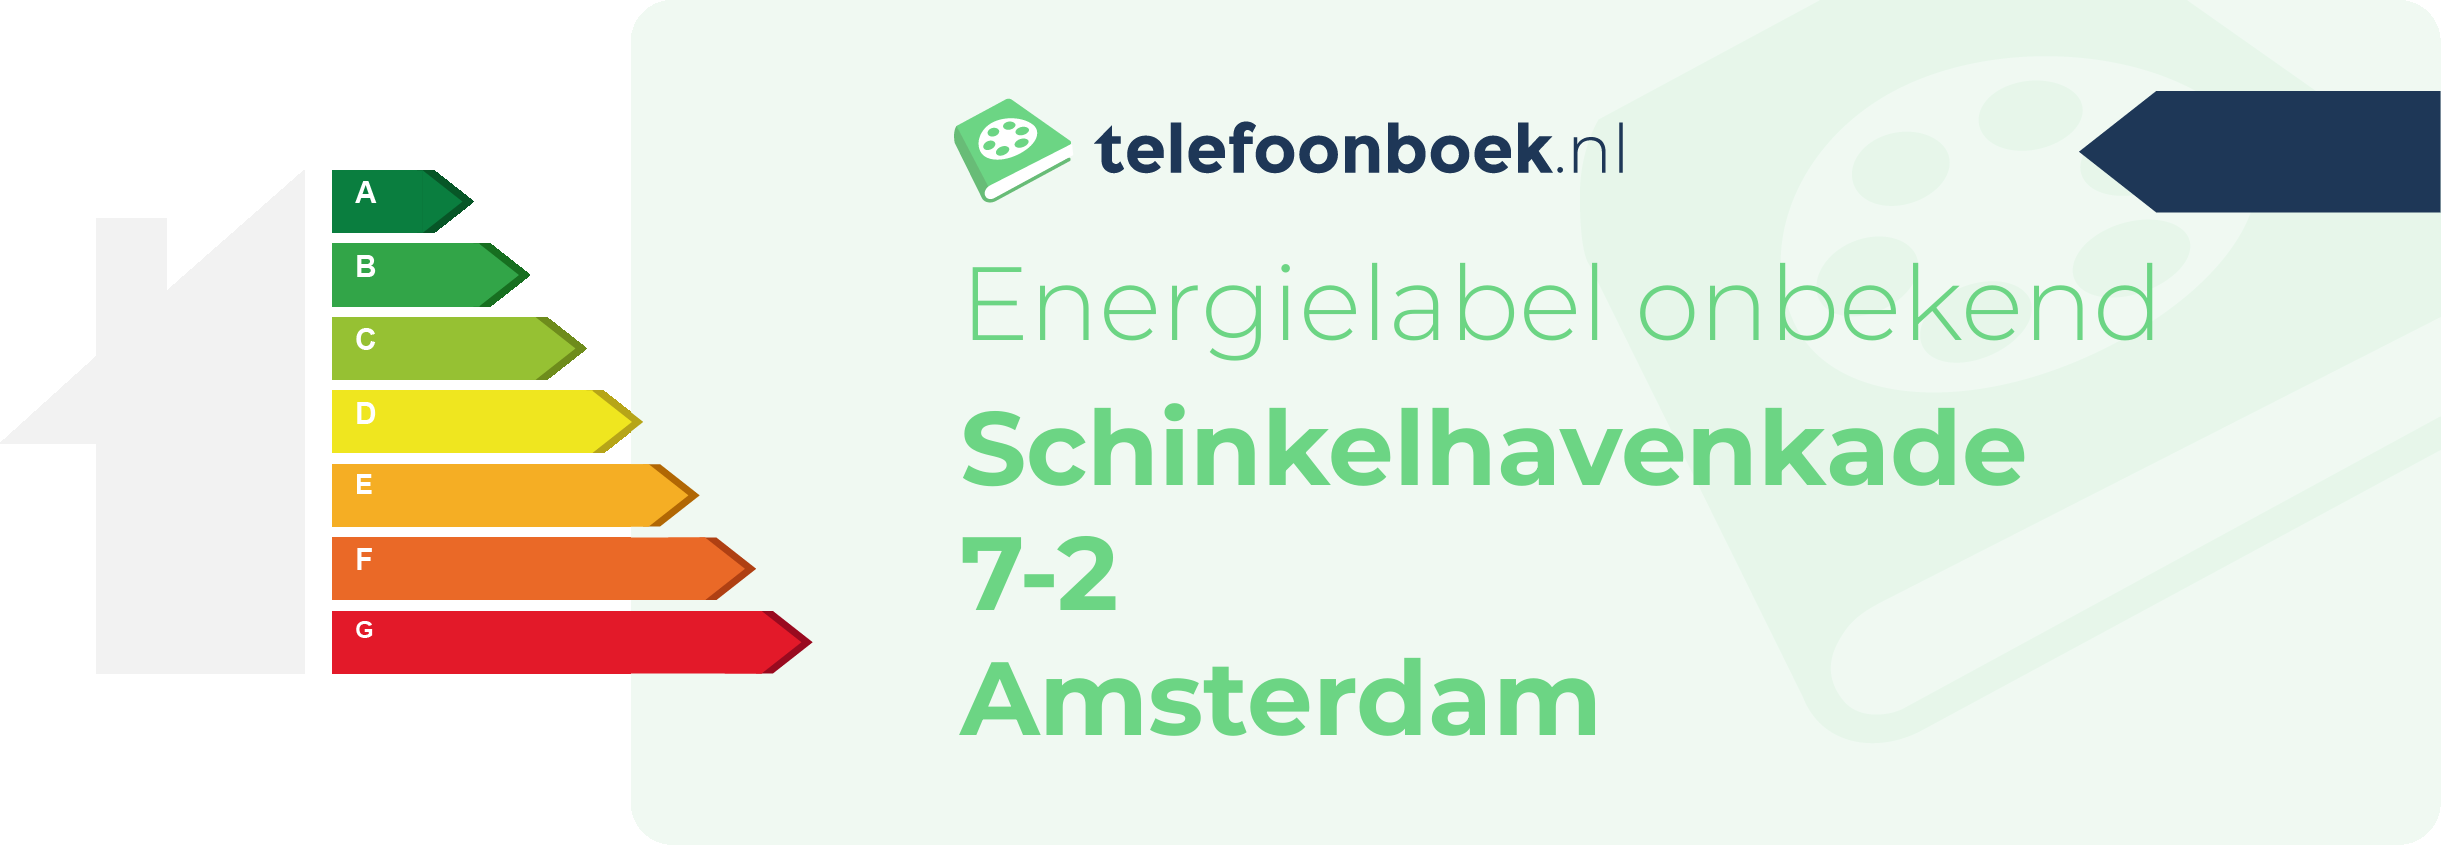 Energielabel Schinkelhavenkade 7-2 Amsterdam